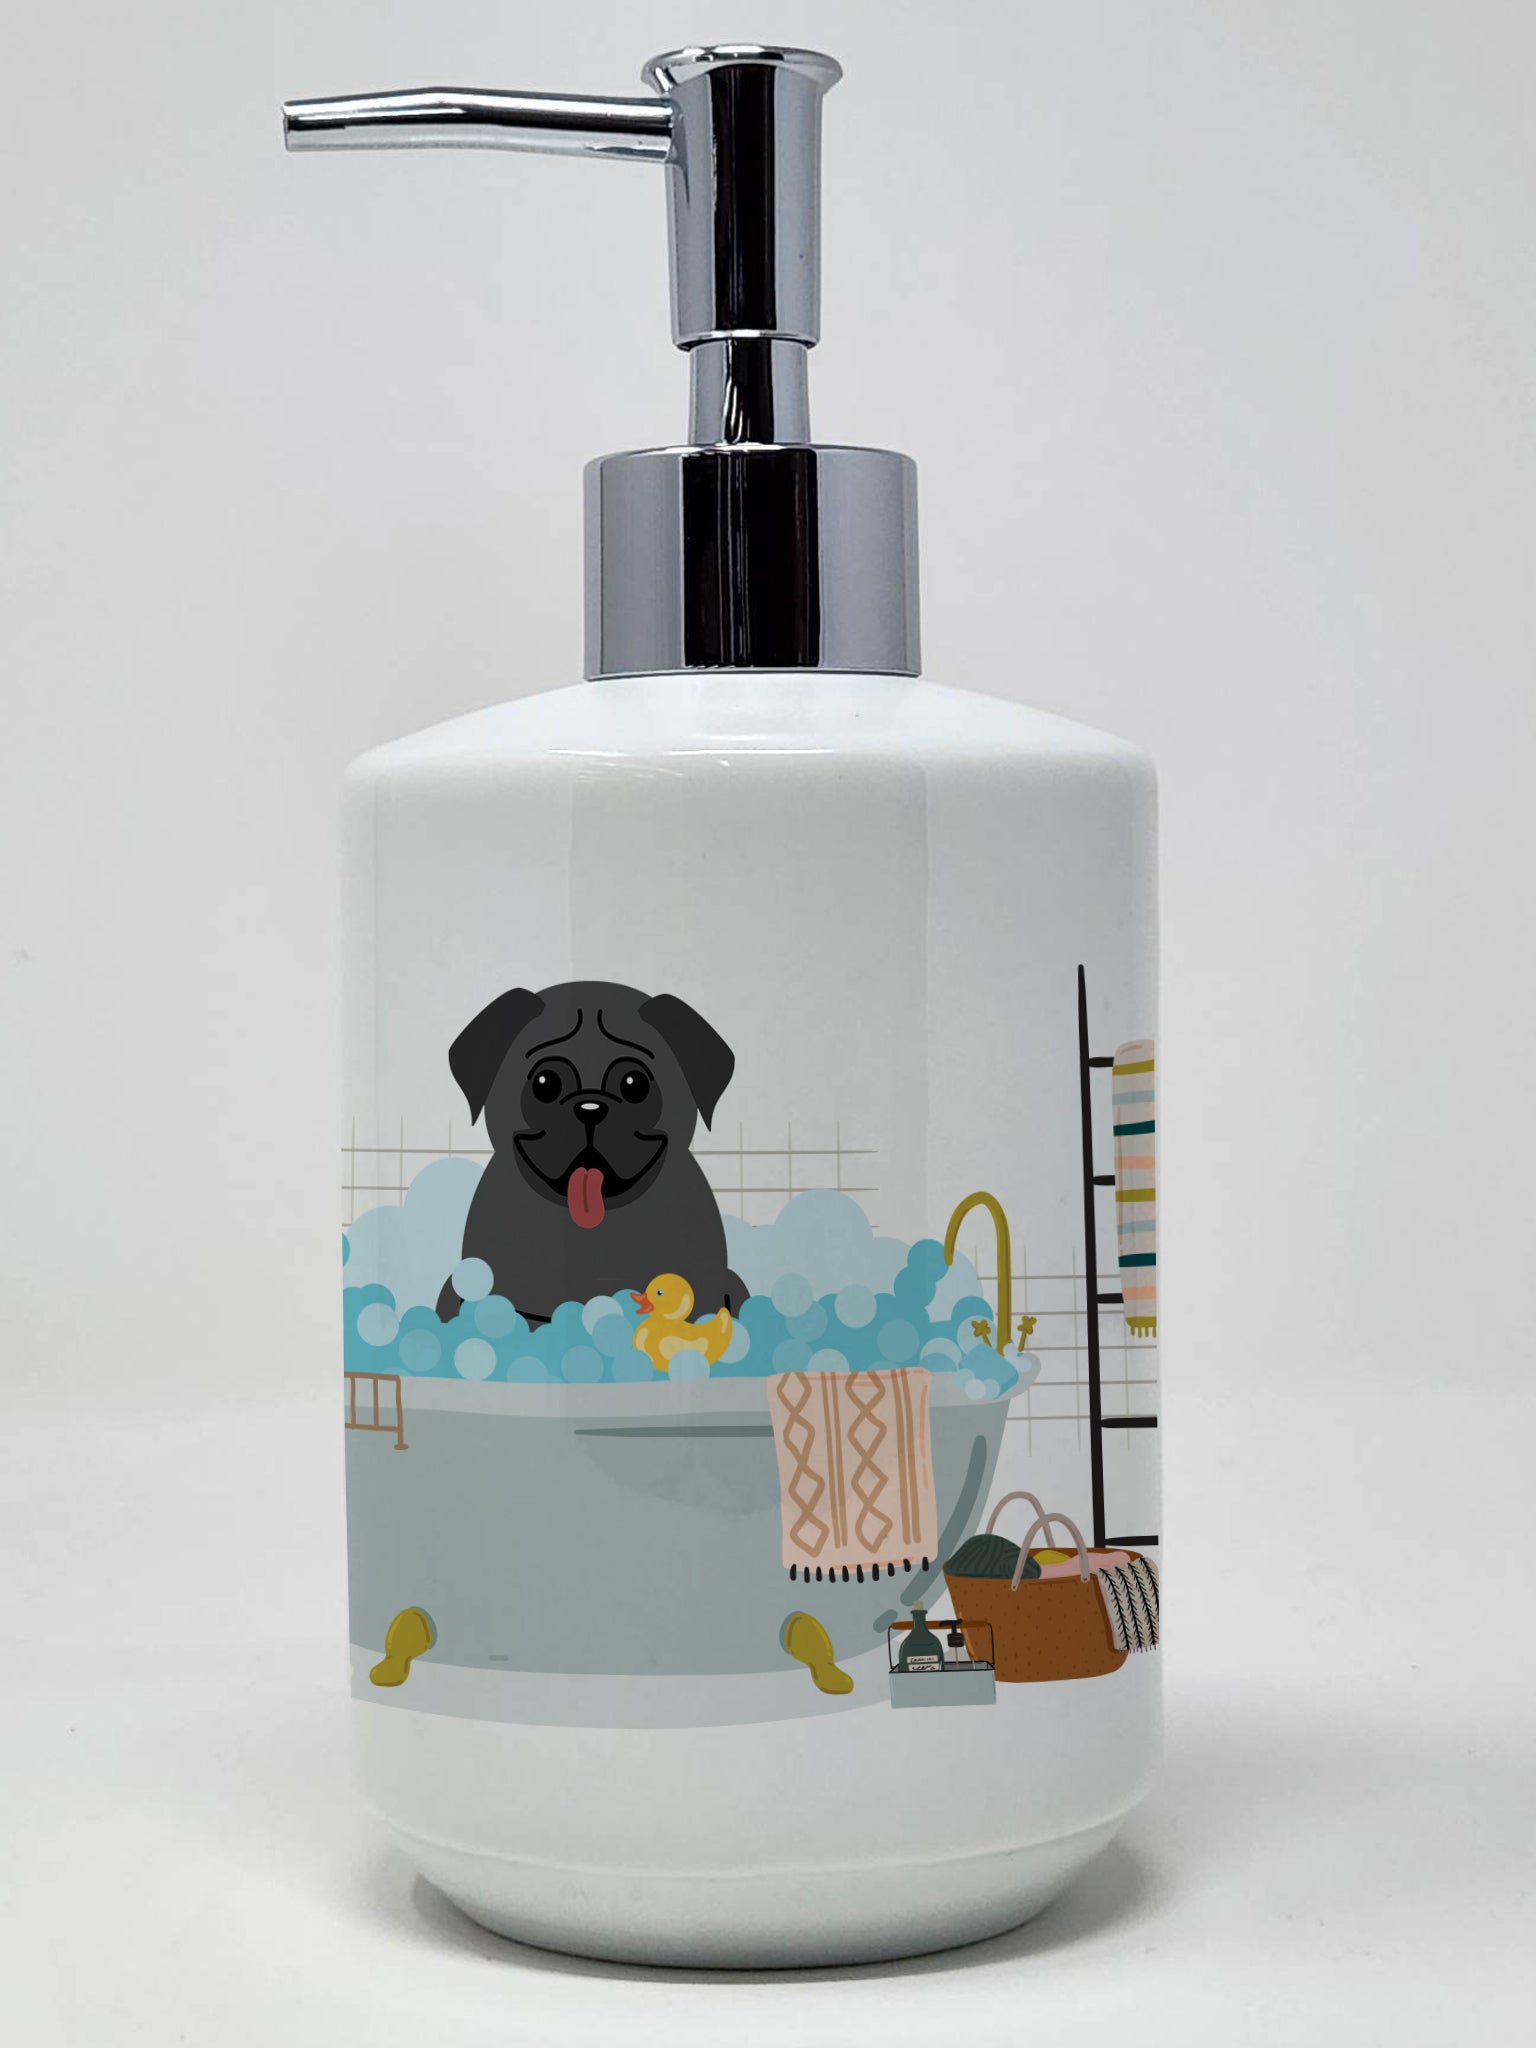 Buy this Black Pug in Bathtub Ceramic Soap Dispenser